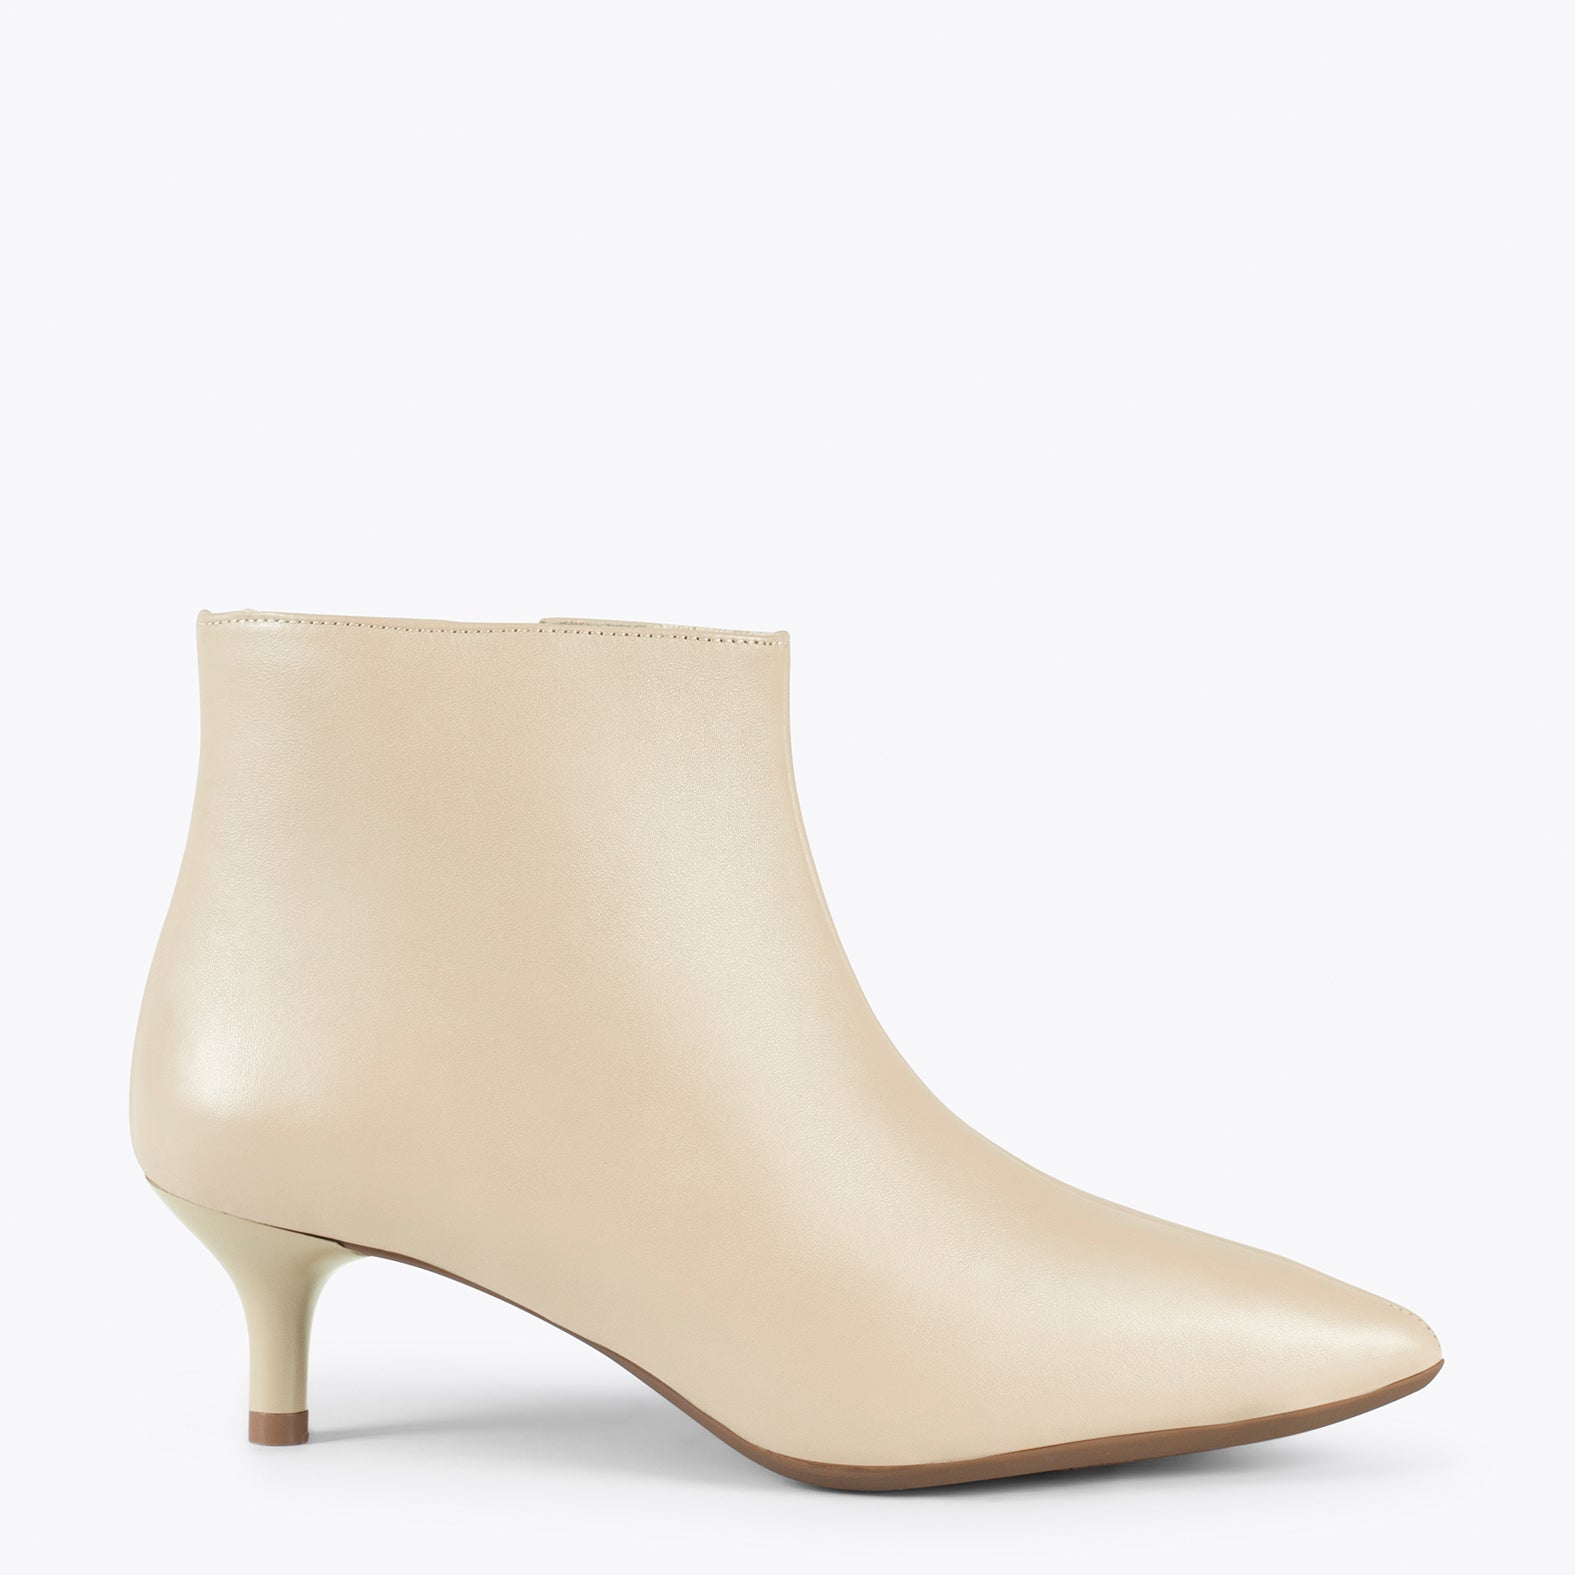 OUTFIT – WHITE elegant low heel booties